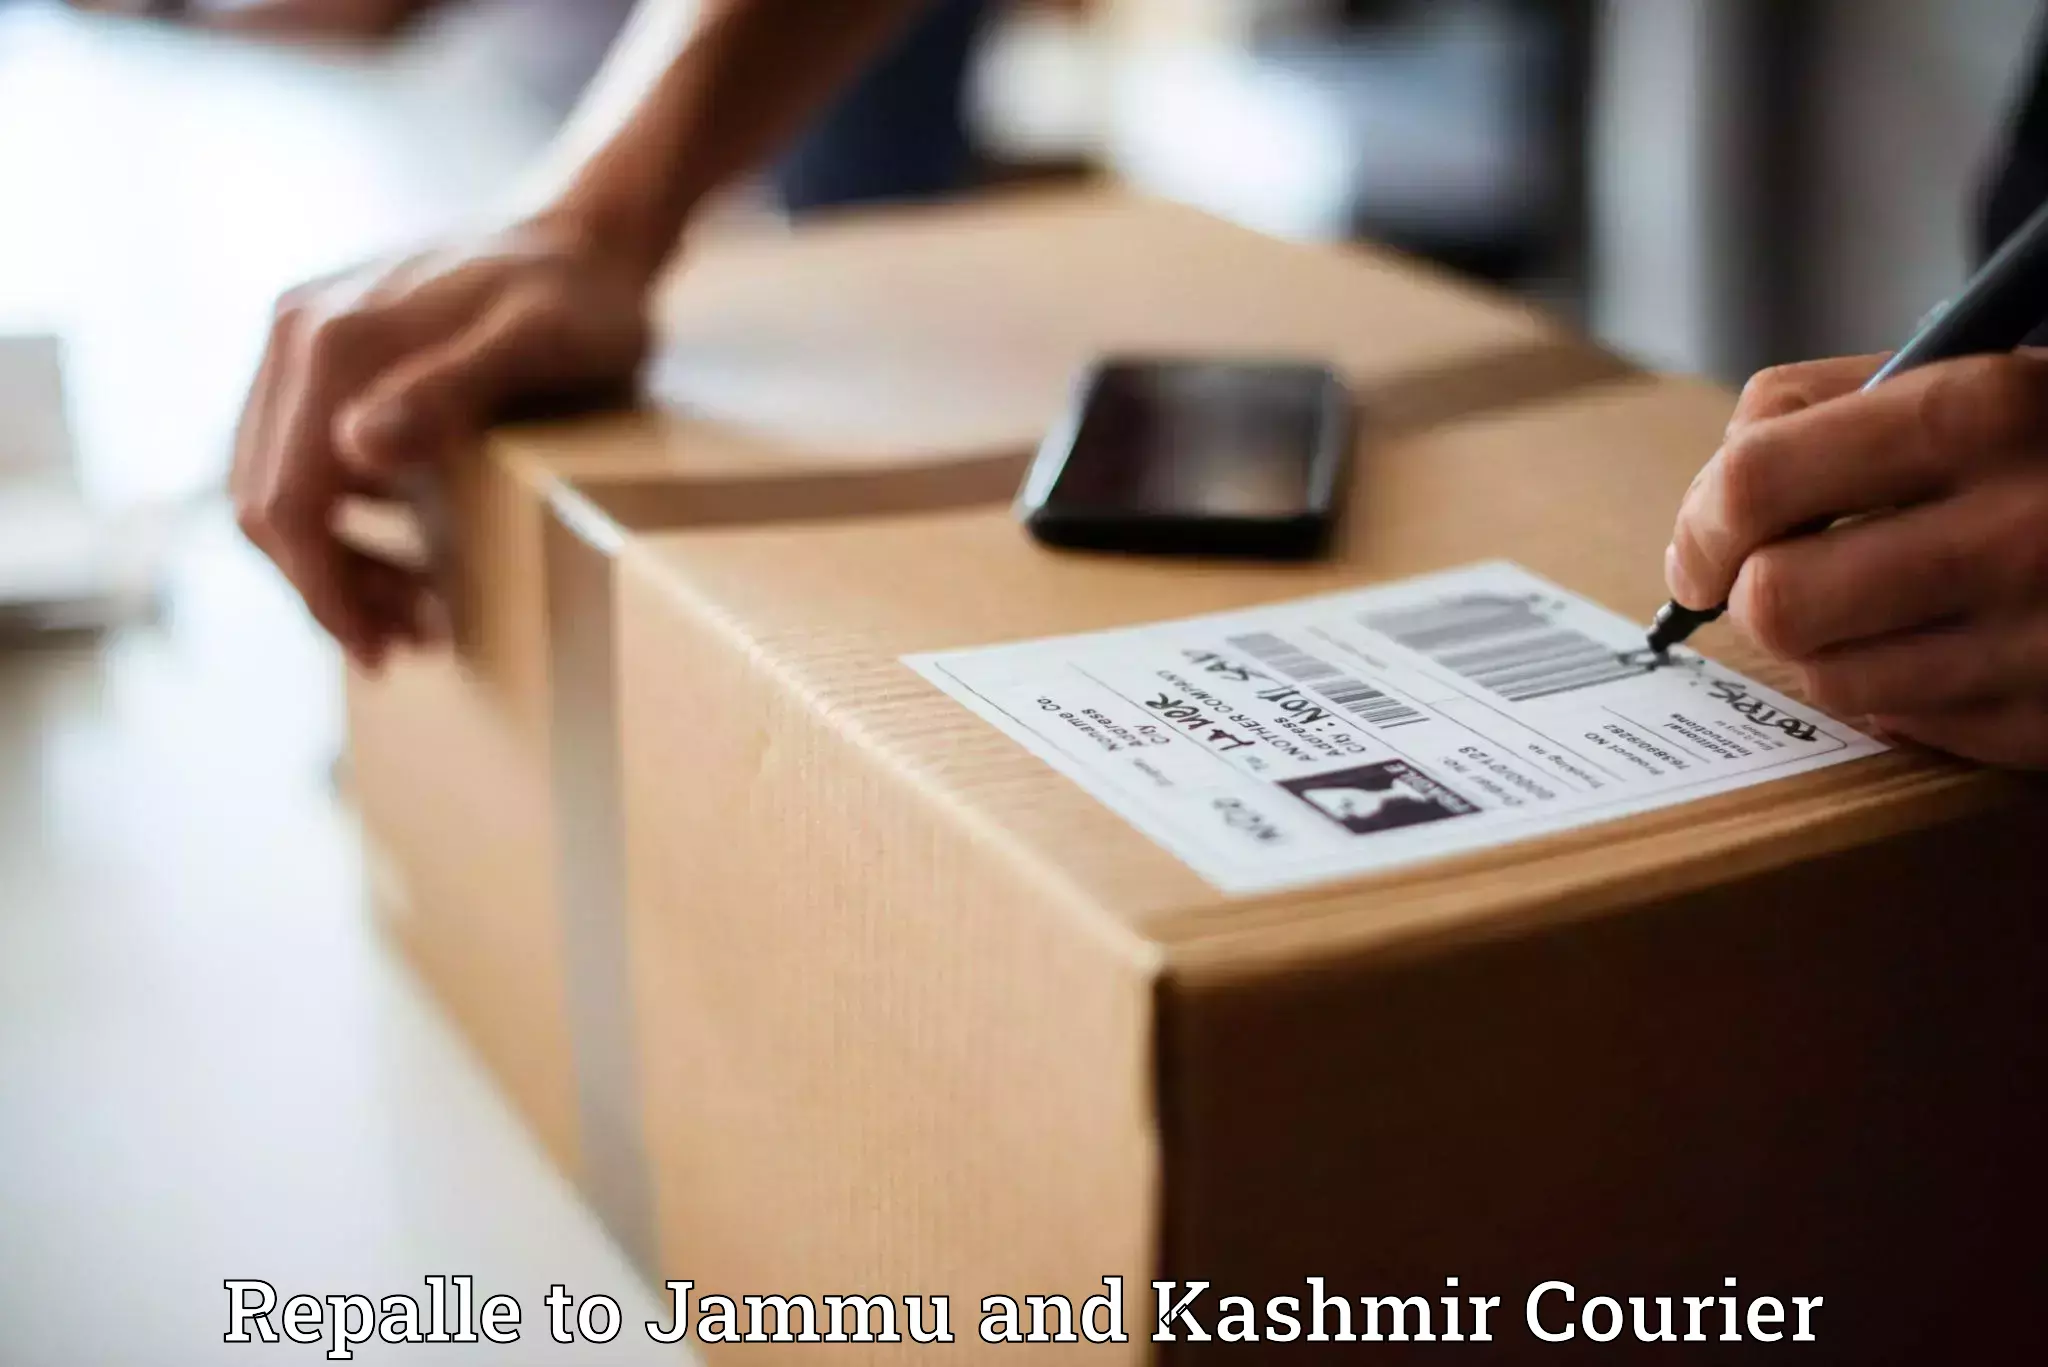 Quick dispatch service Repalle to Jammu